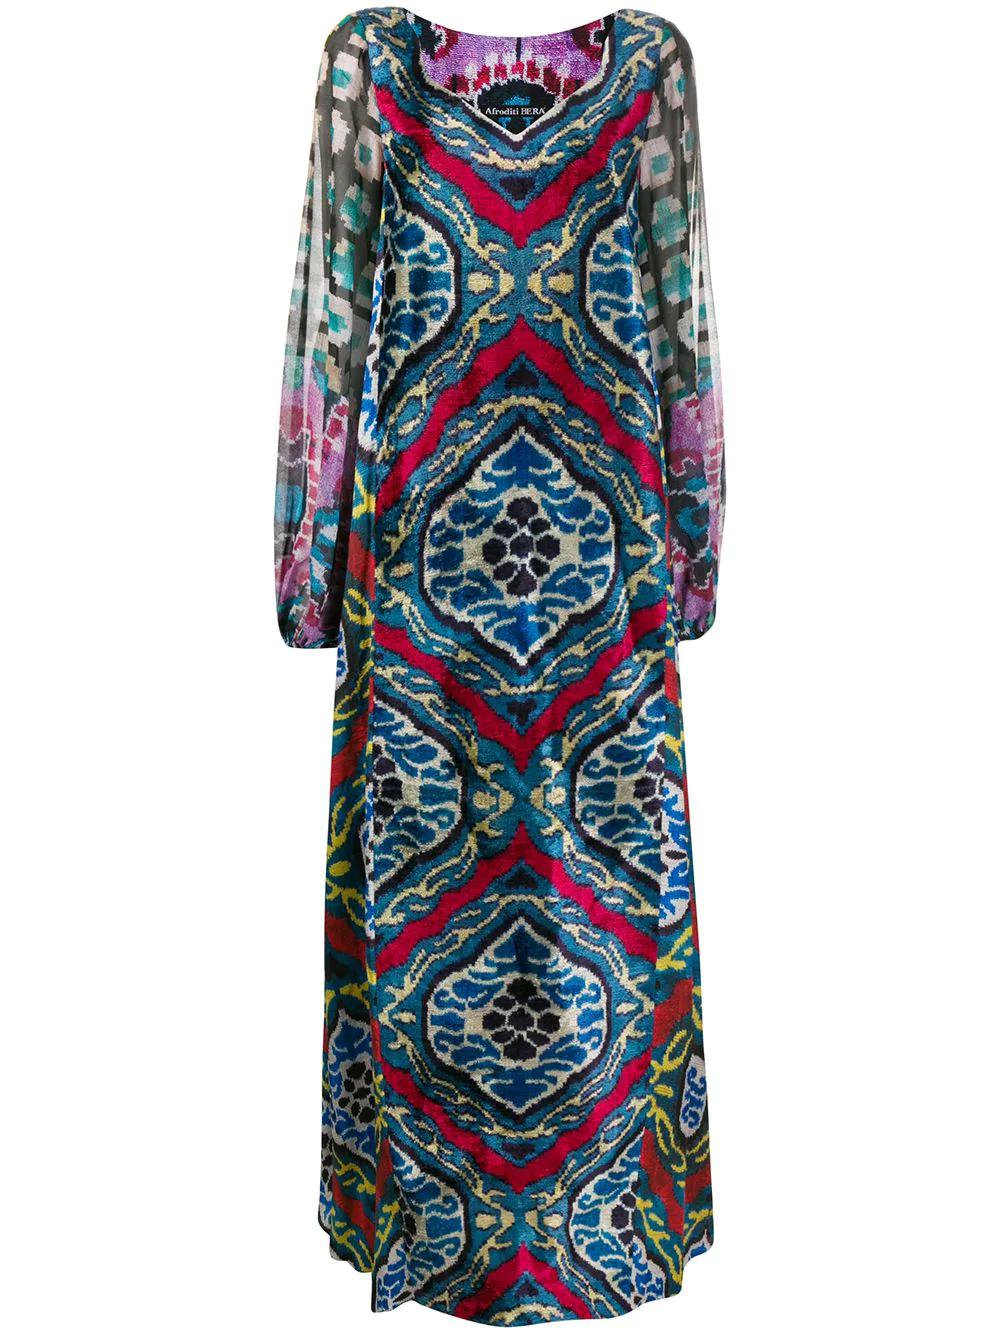 carpet-print velvet and chiffon gown by AFRODITI HERA